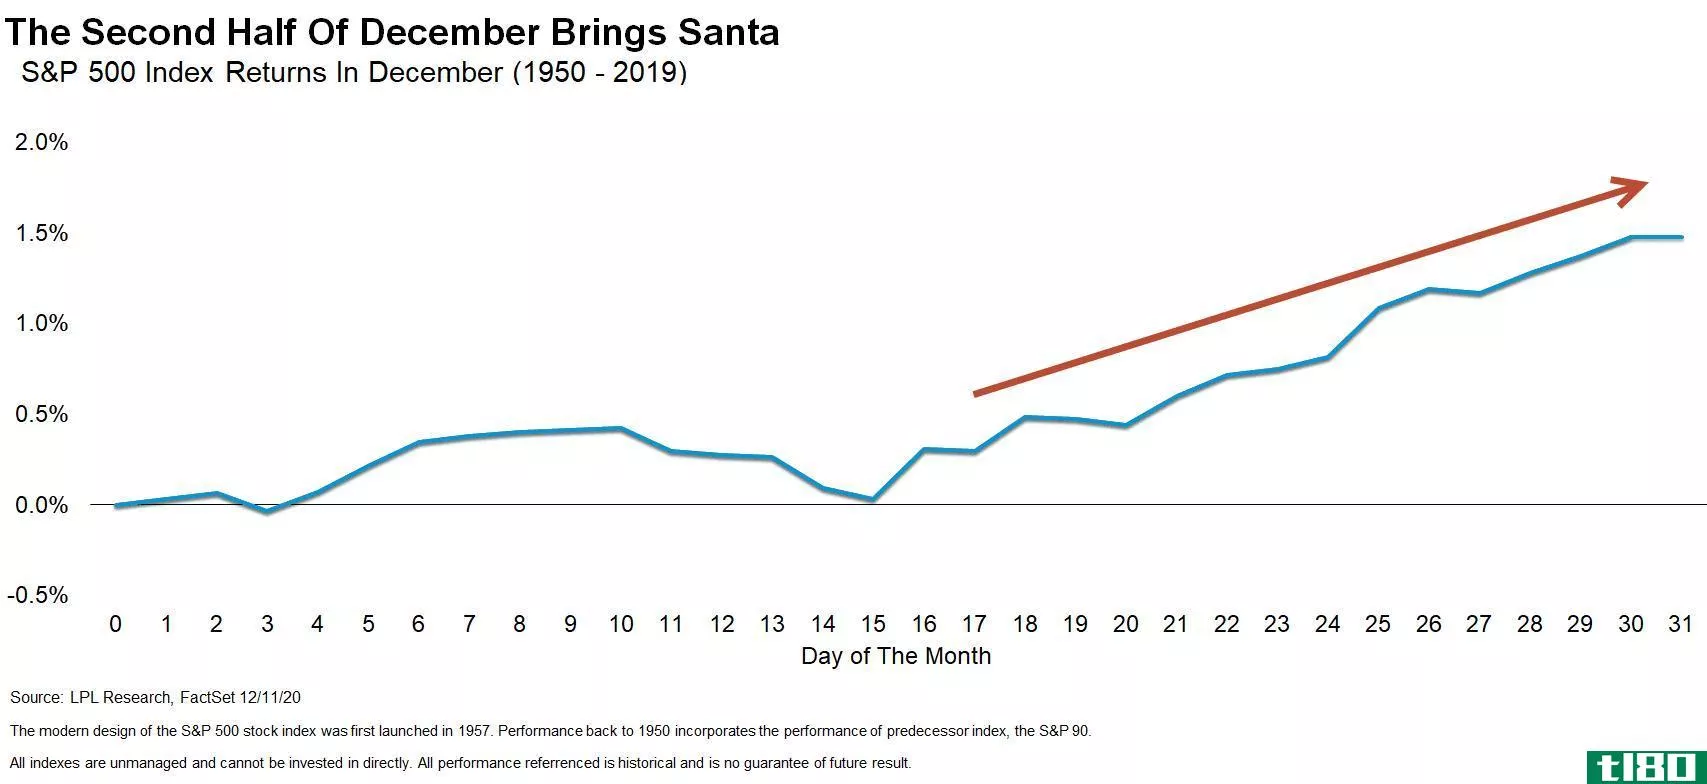 The second half of Dec brings Santa